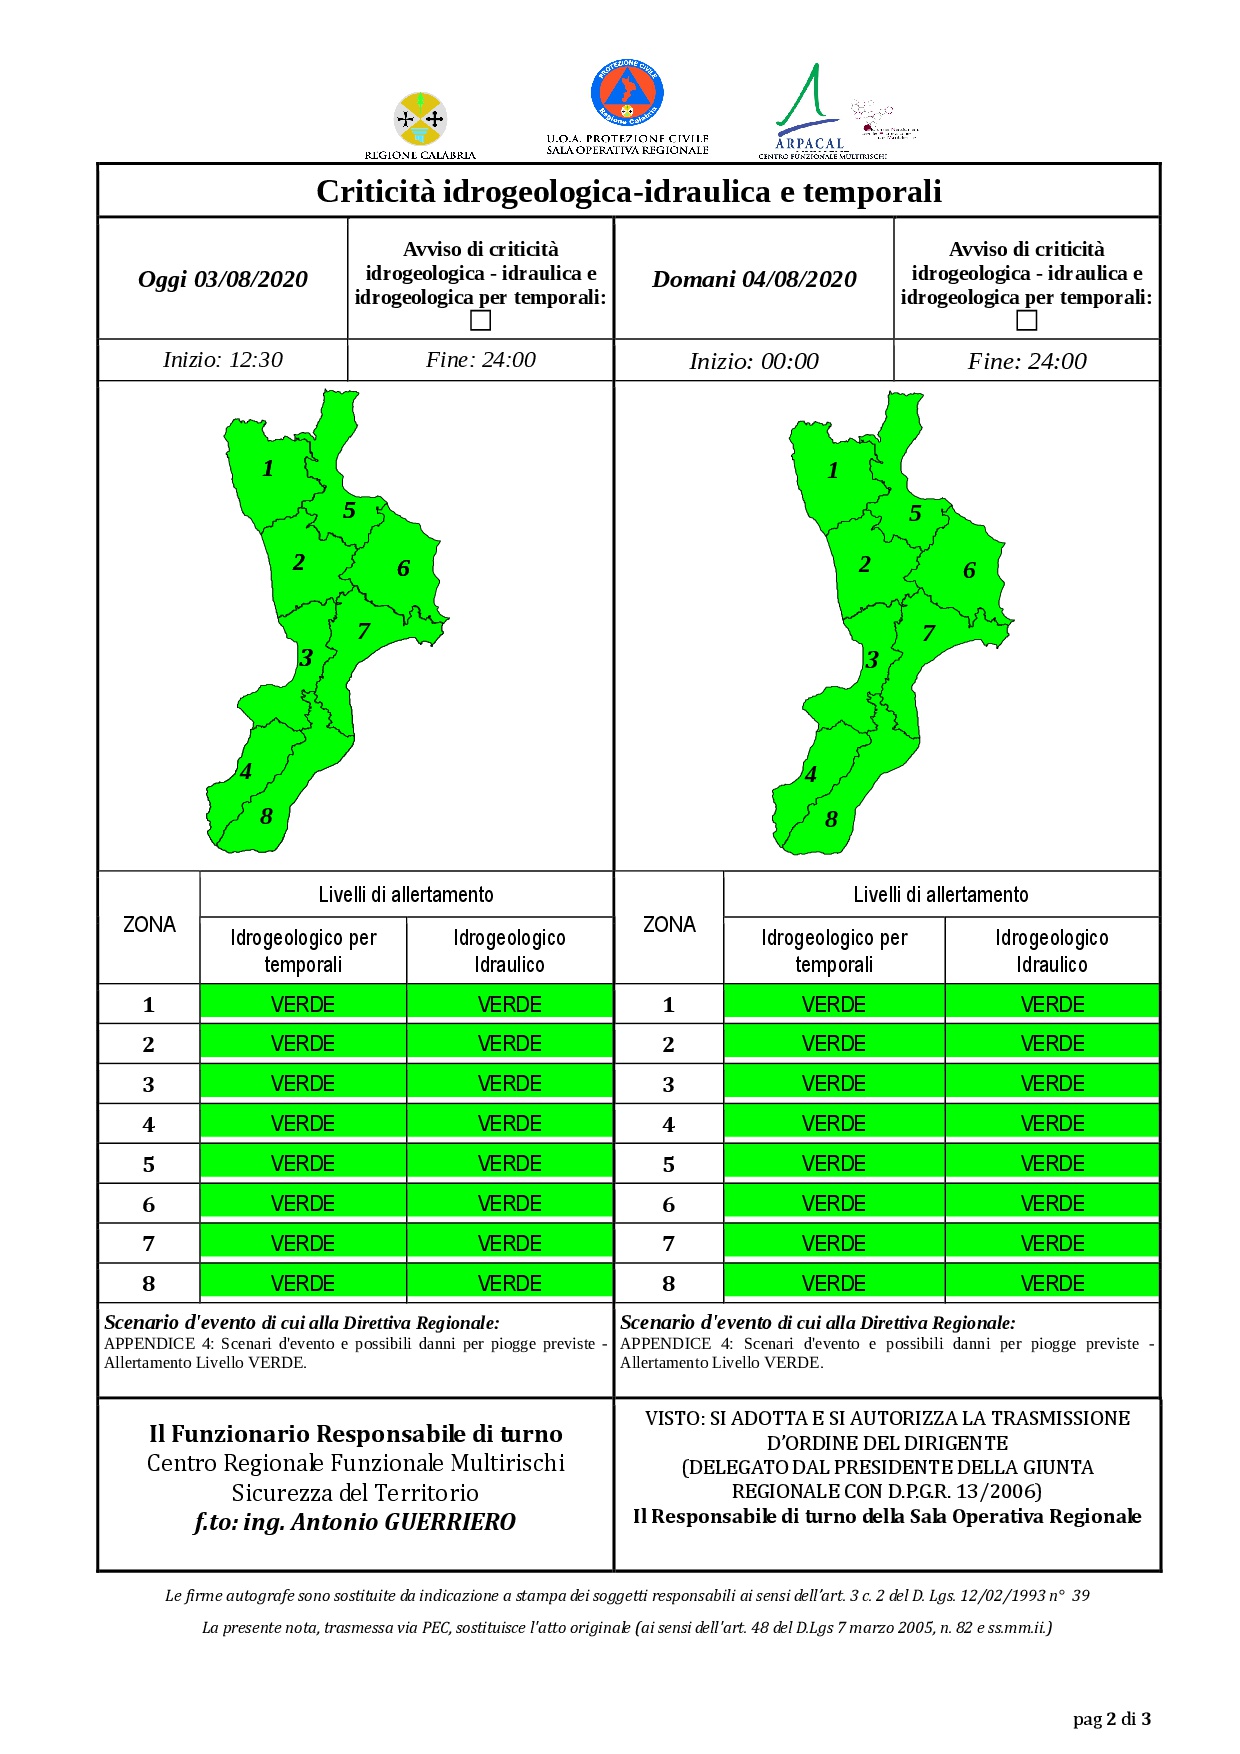 Criticità idrogeologica-idraulica e temporali in Calabria 03-08-2020